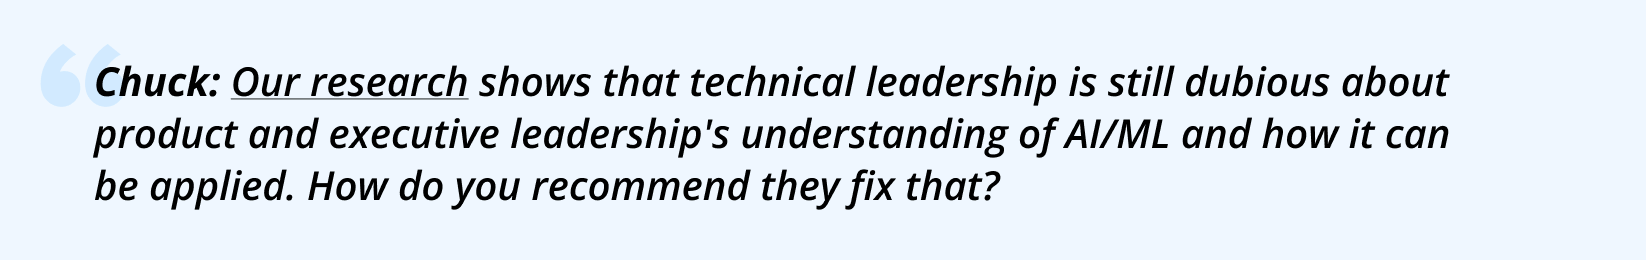 Technical leadership is still dubious